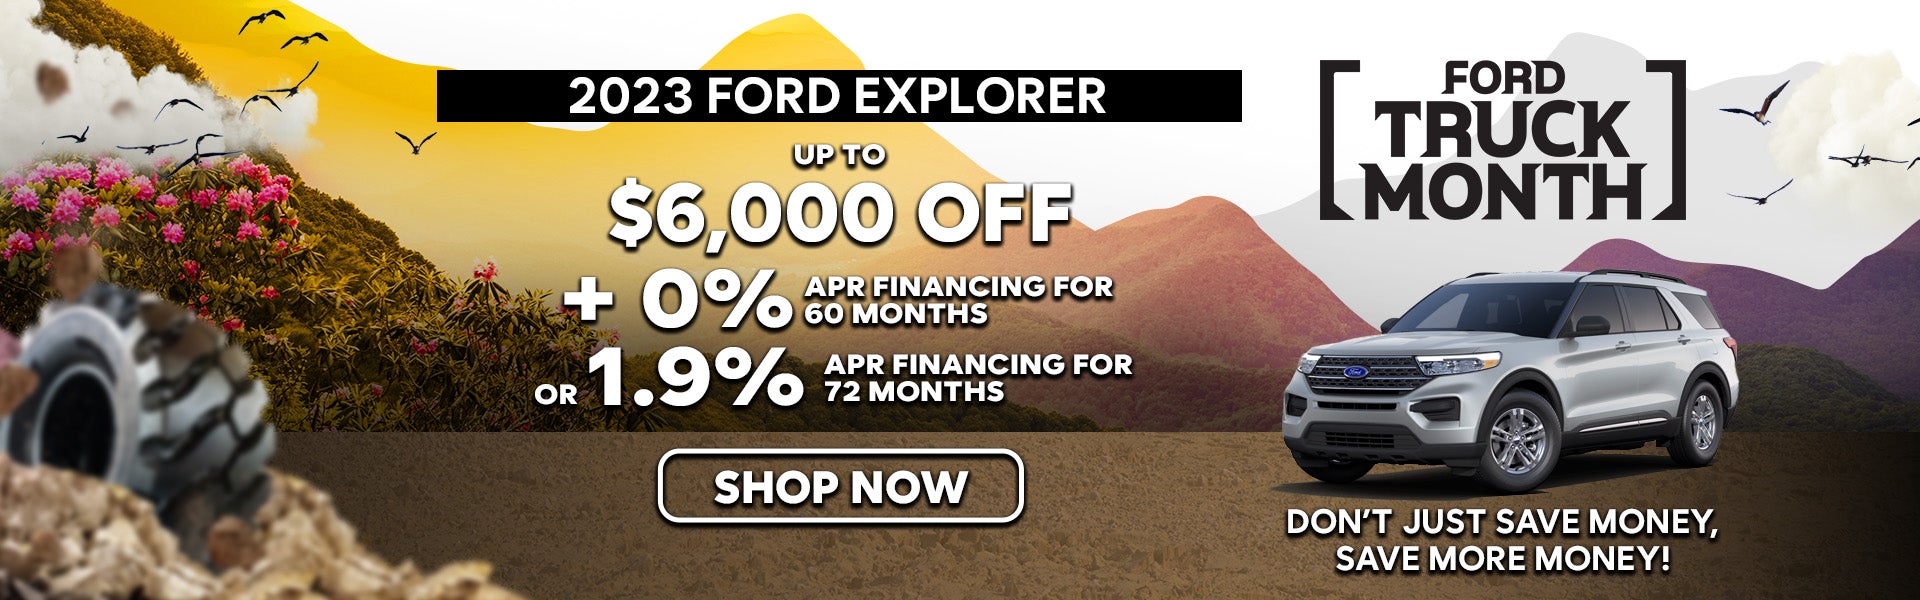 2023 Ford Explorer Special Offer